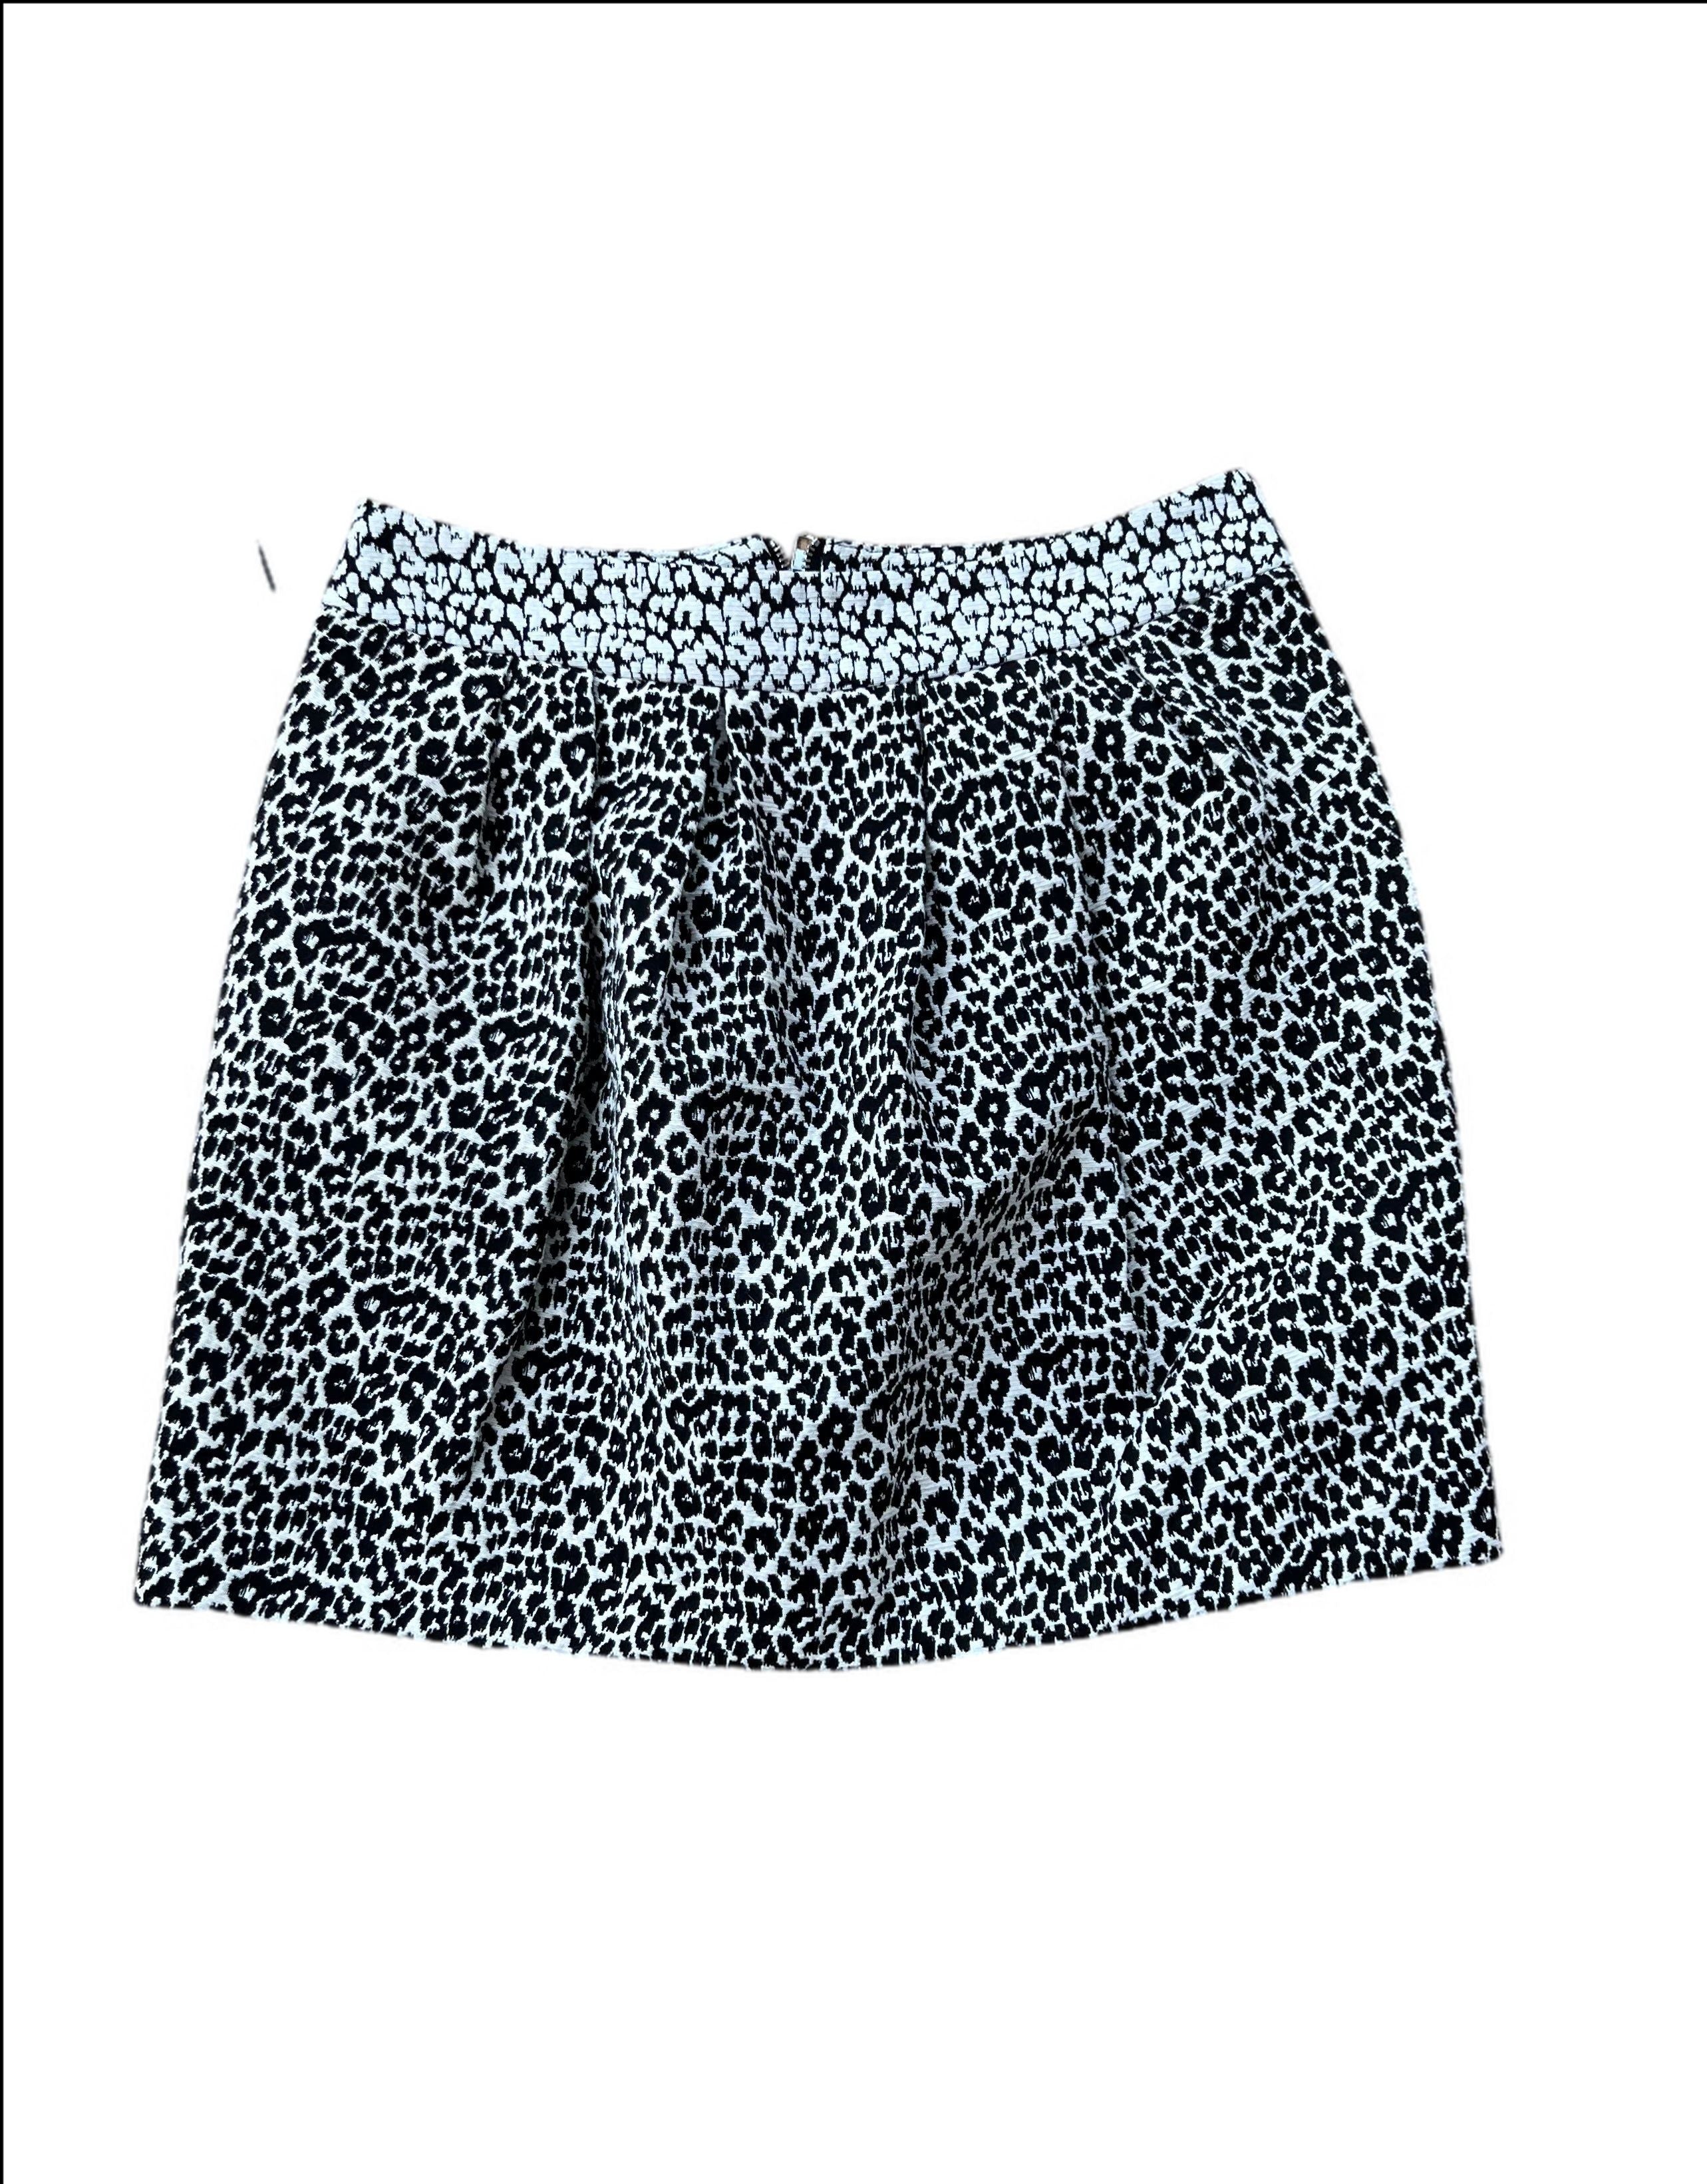 Short Leopard Print Skirt